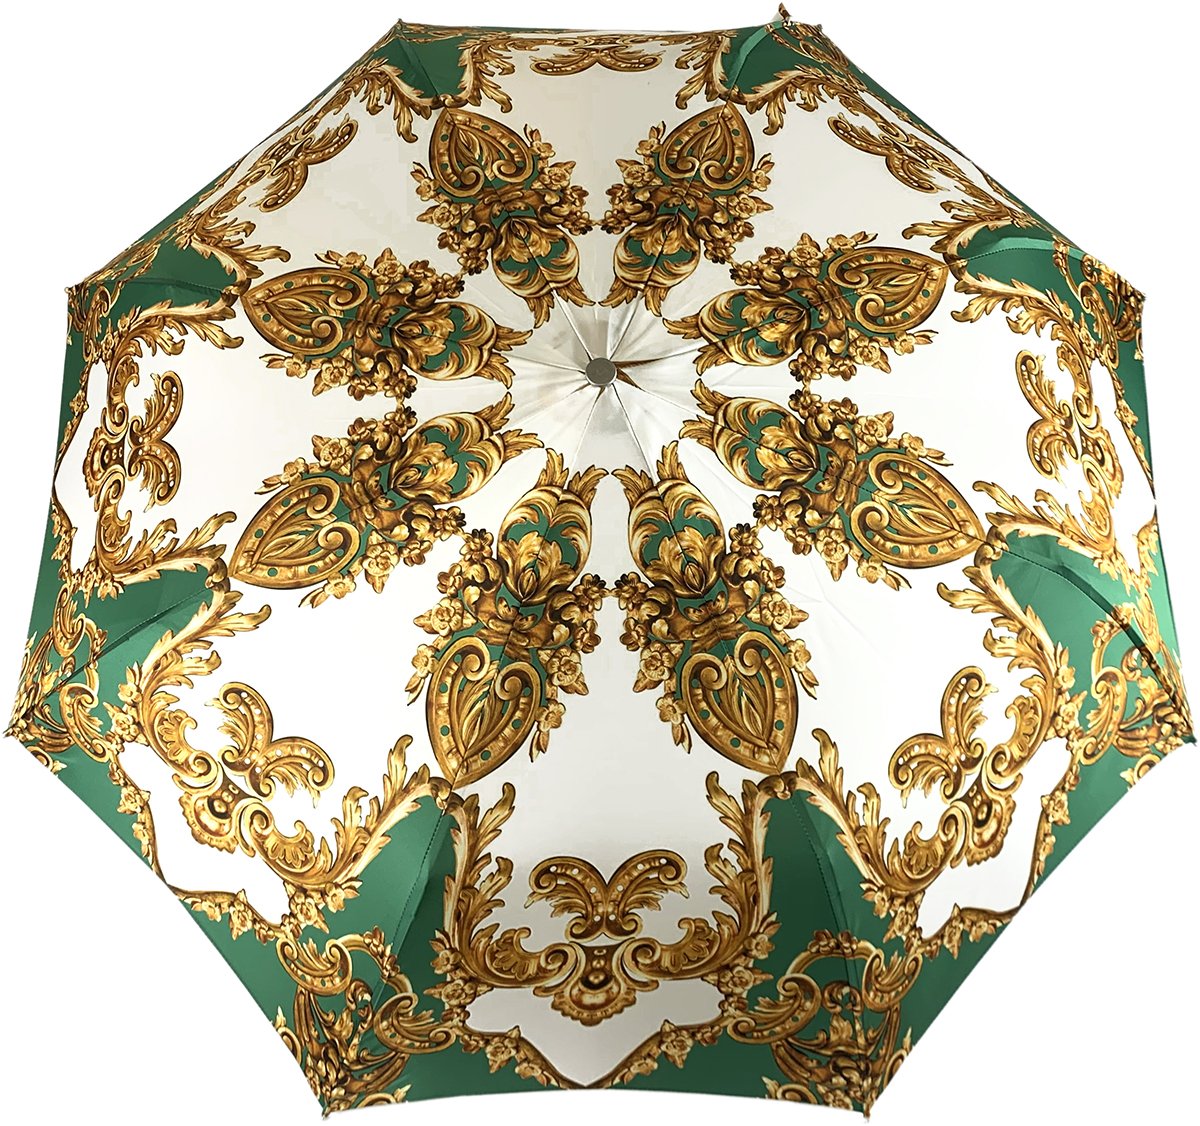 Ladies Folding Umbrella - New Exclusive Design - IL MARCHESATO LUXURY UMBRELLAS, CANES AND SHOEHORNS